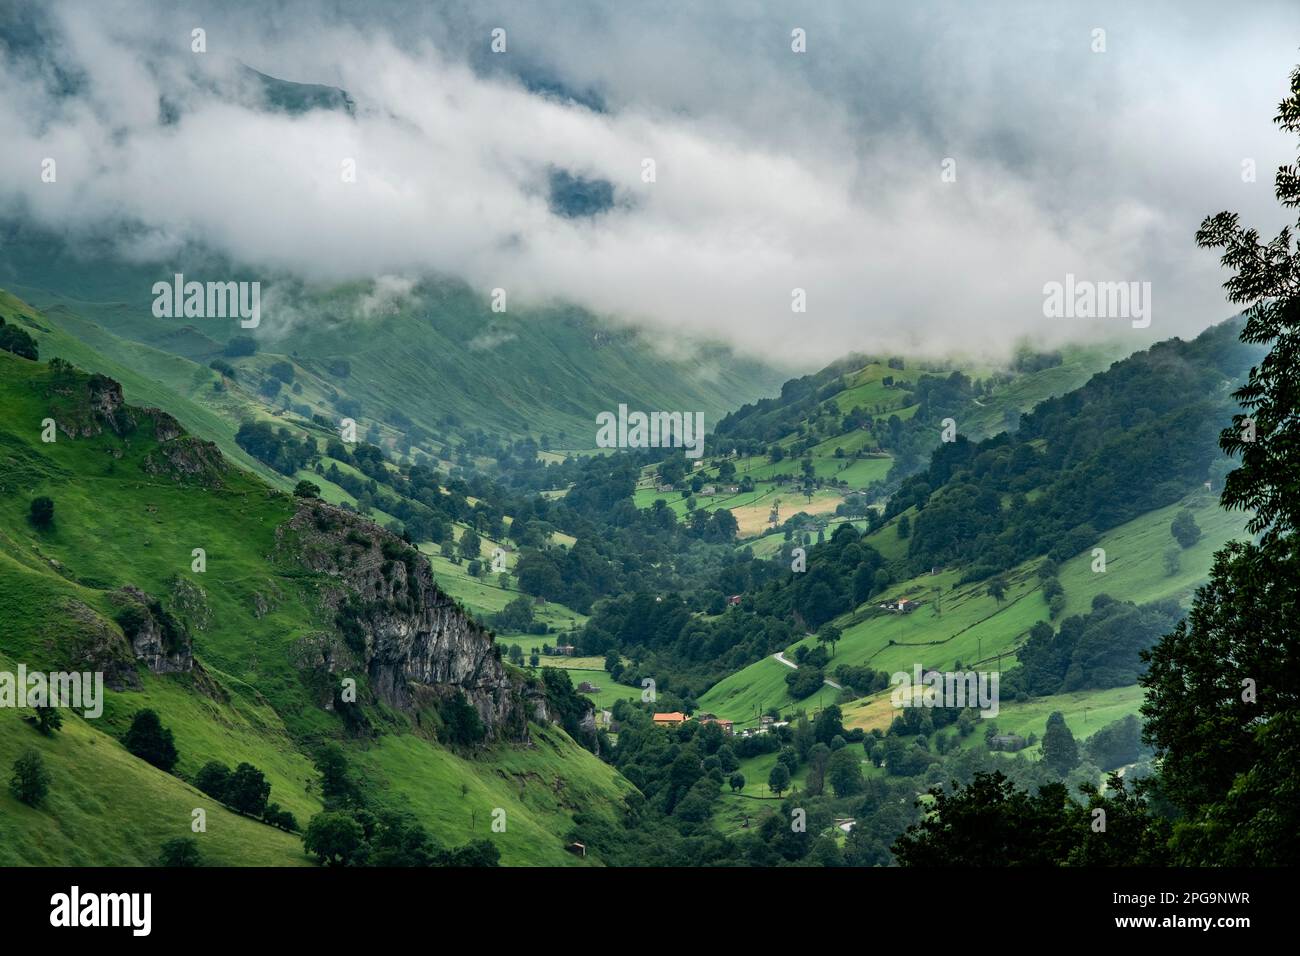 Nuvole di pioggia su una verde valle di montagna, Valles pasiegos, Cantabria, Spagna Foto Stock